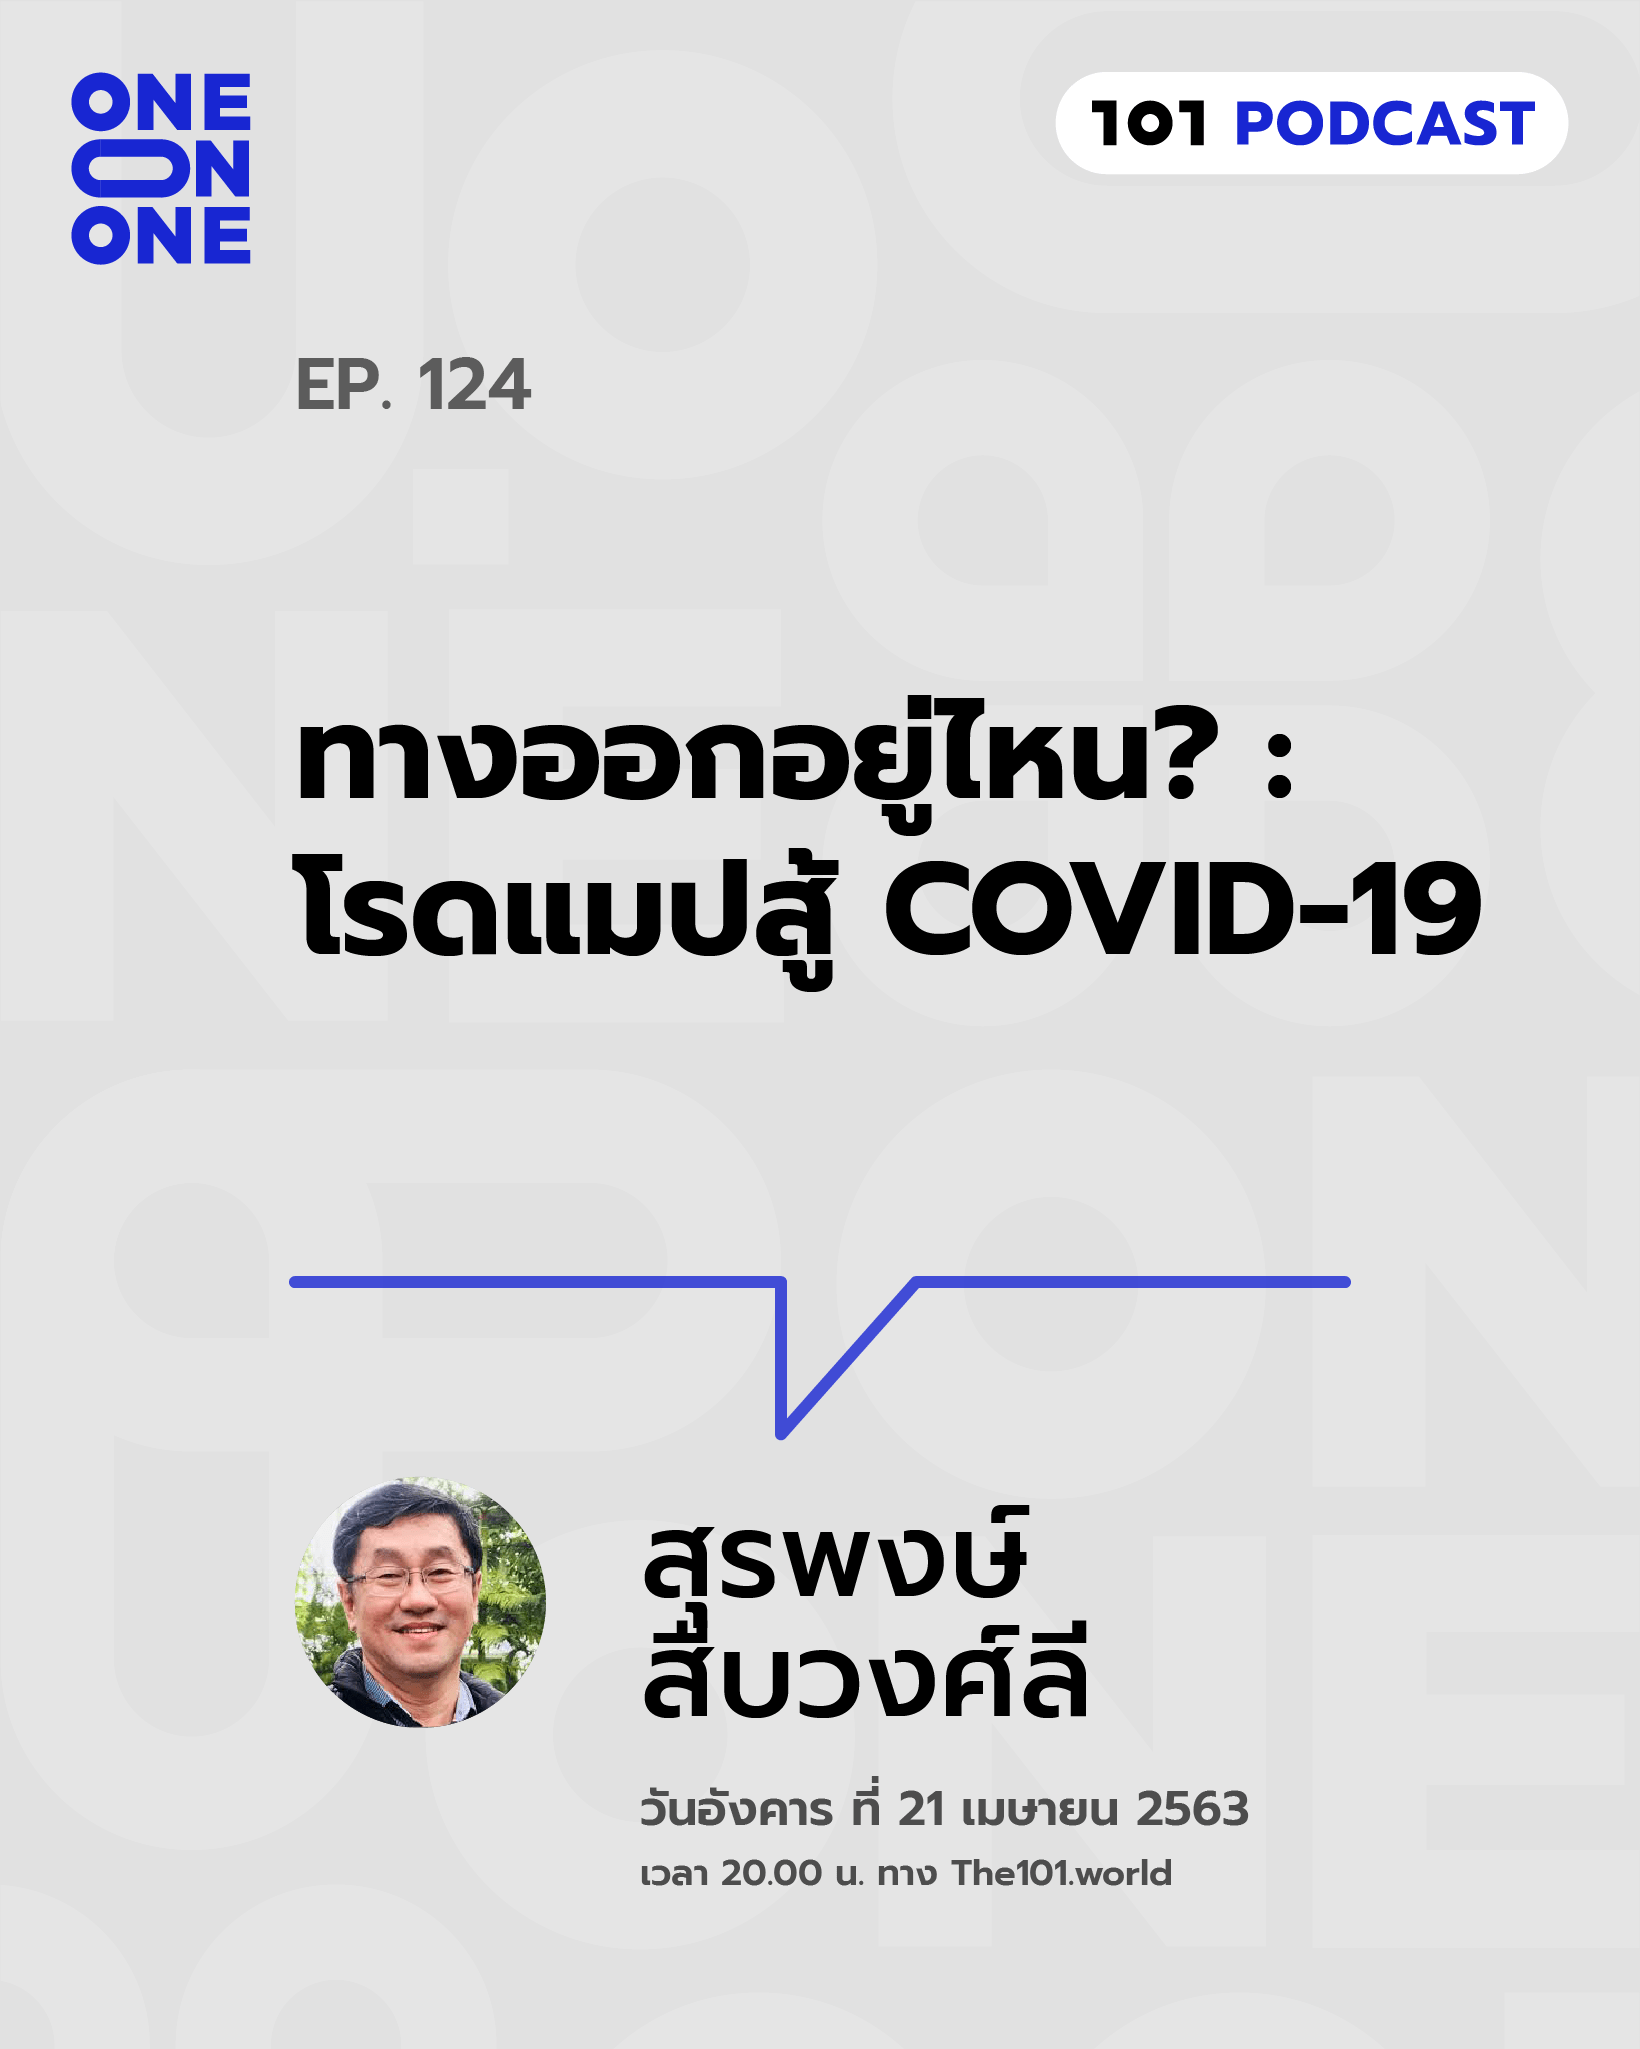 101 One-On-One Ep.124 : "ทางออกอยู่ไหน? : โรดแมปสู้ COVID-19" - นพ.สุรพงษ์ สืบวงศ์ลี